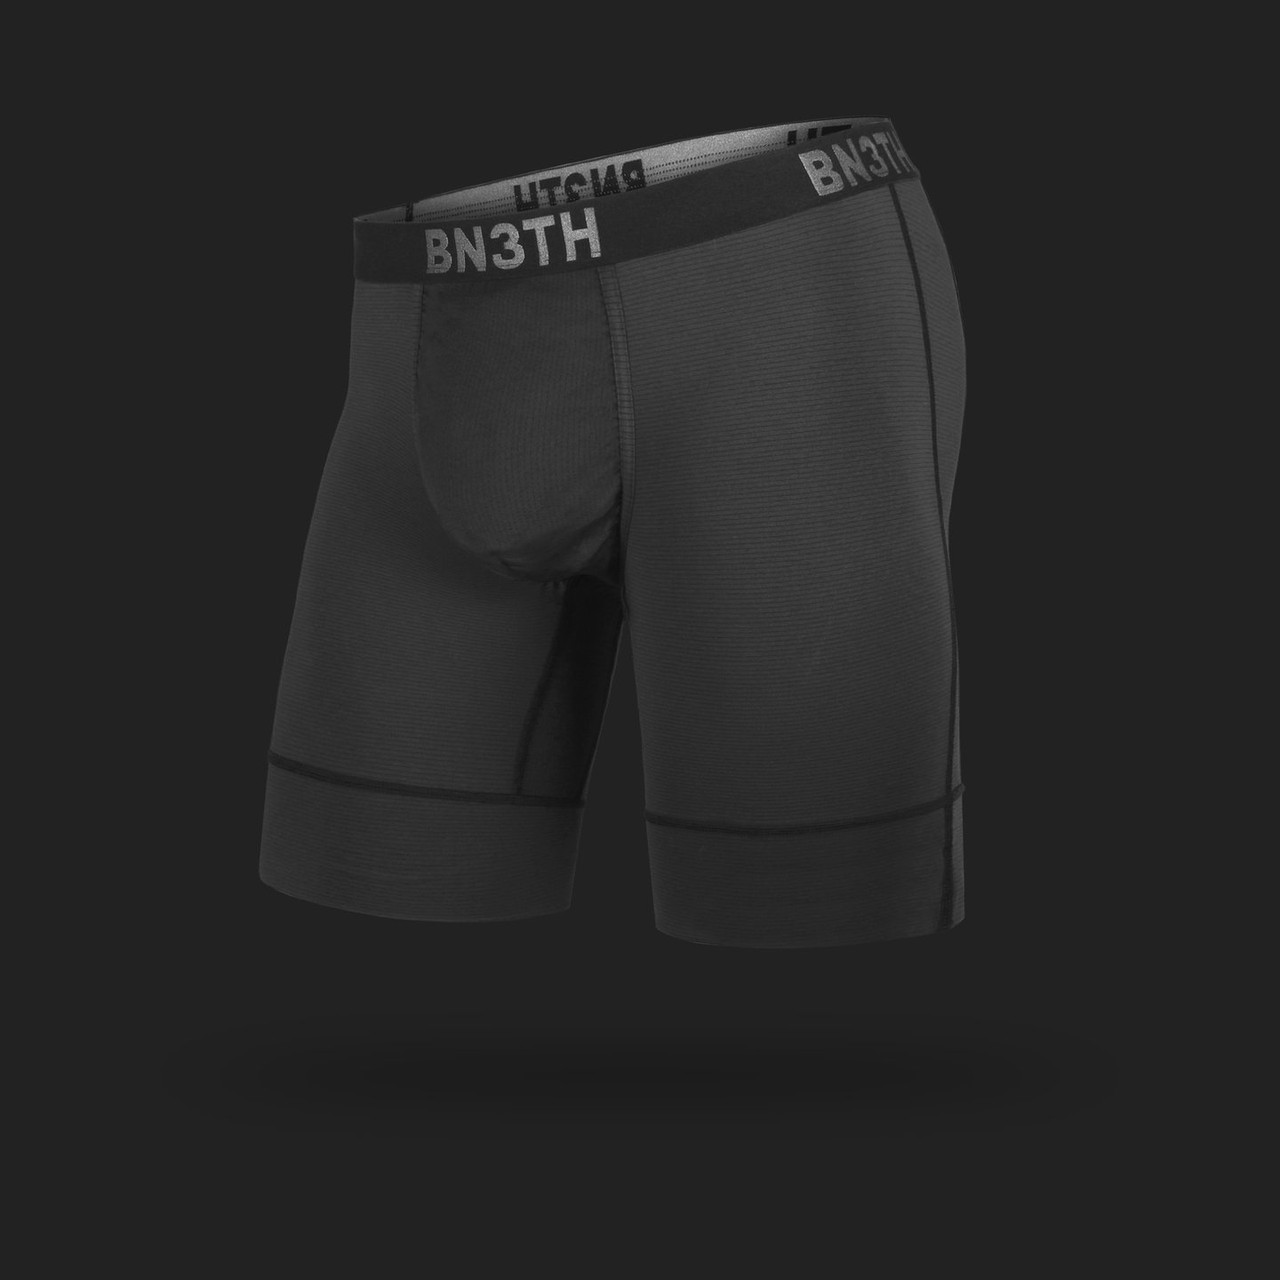 BN3TH Bike Boxers (JCC17707) - Jim's Clothes Closet